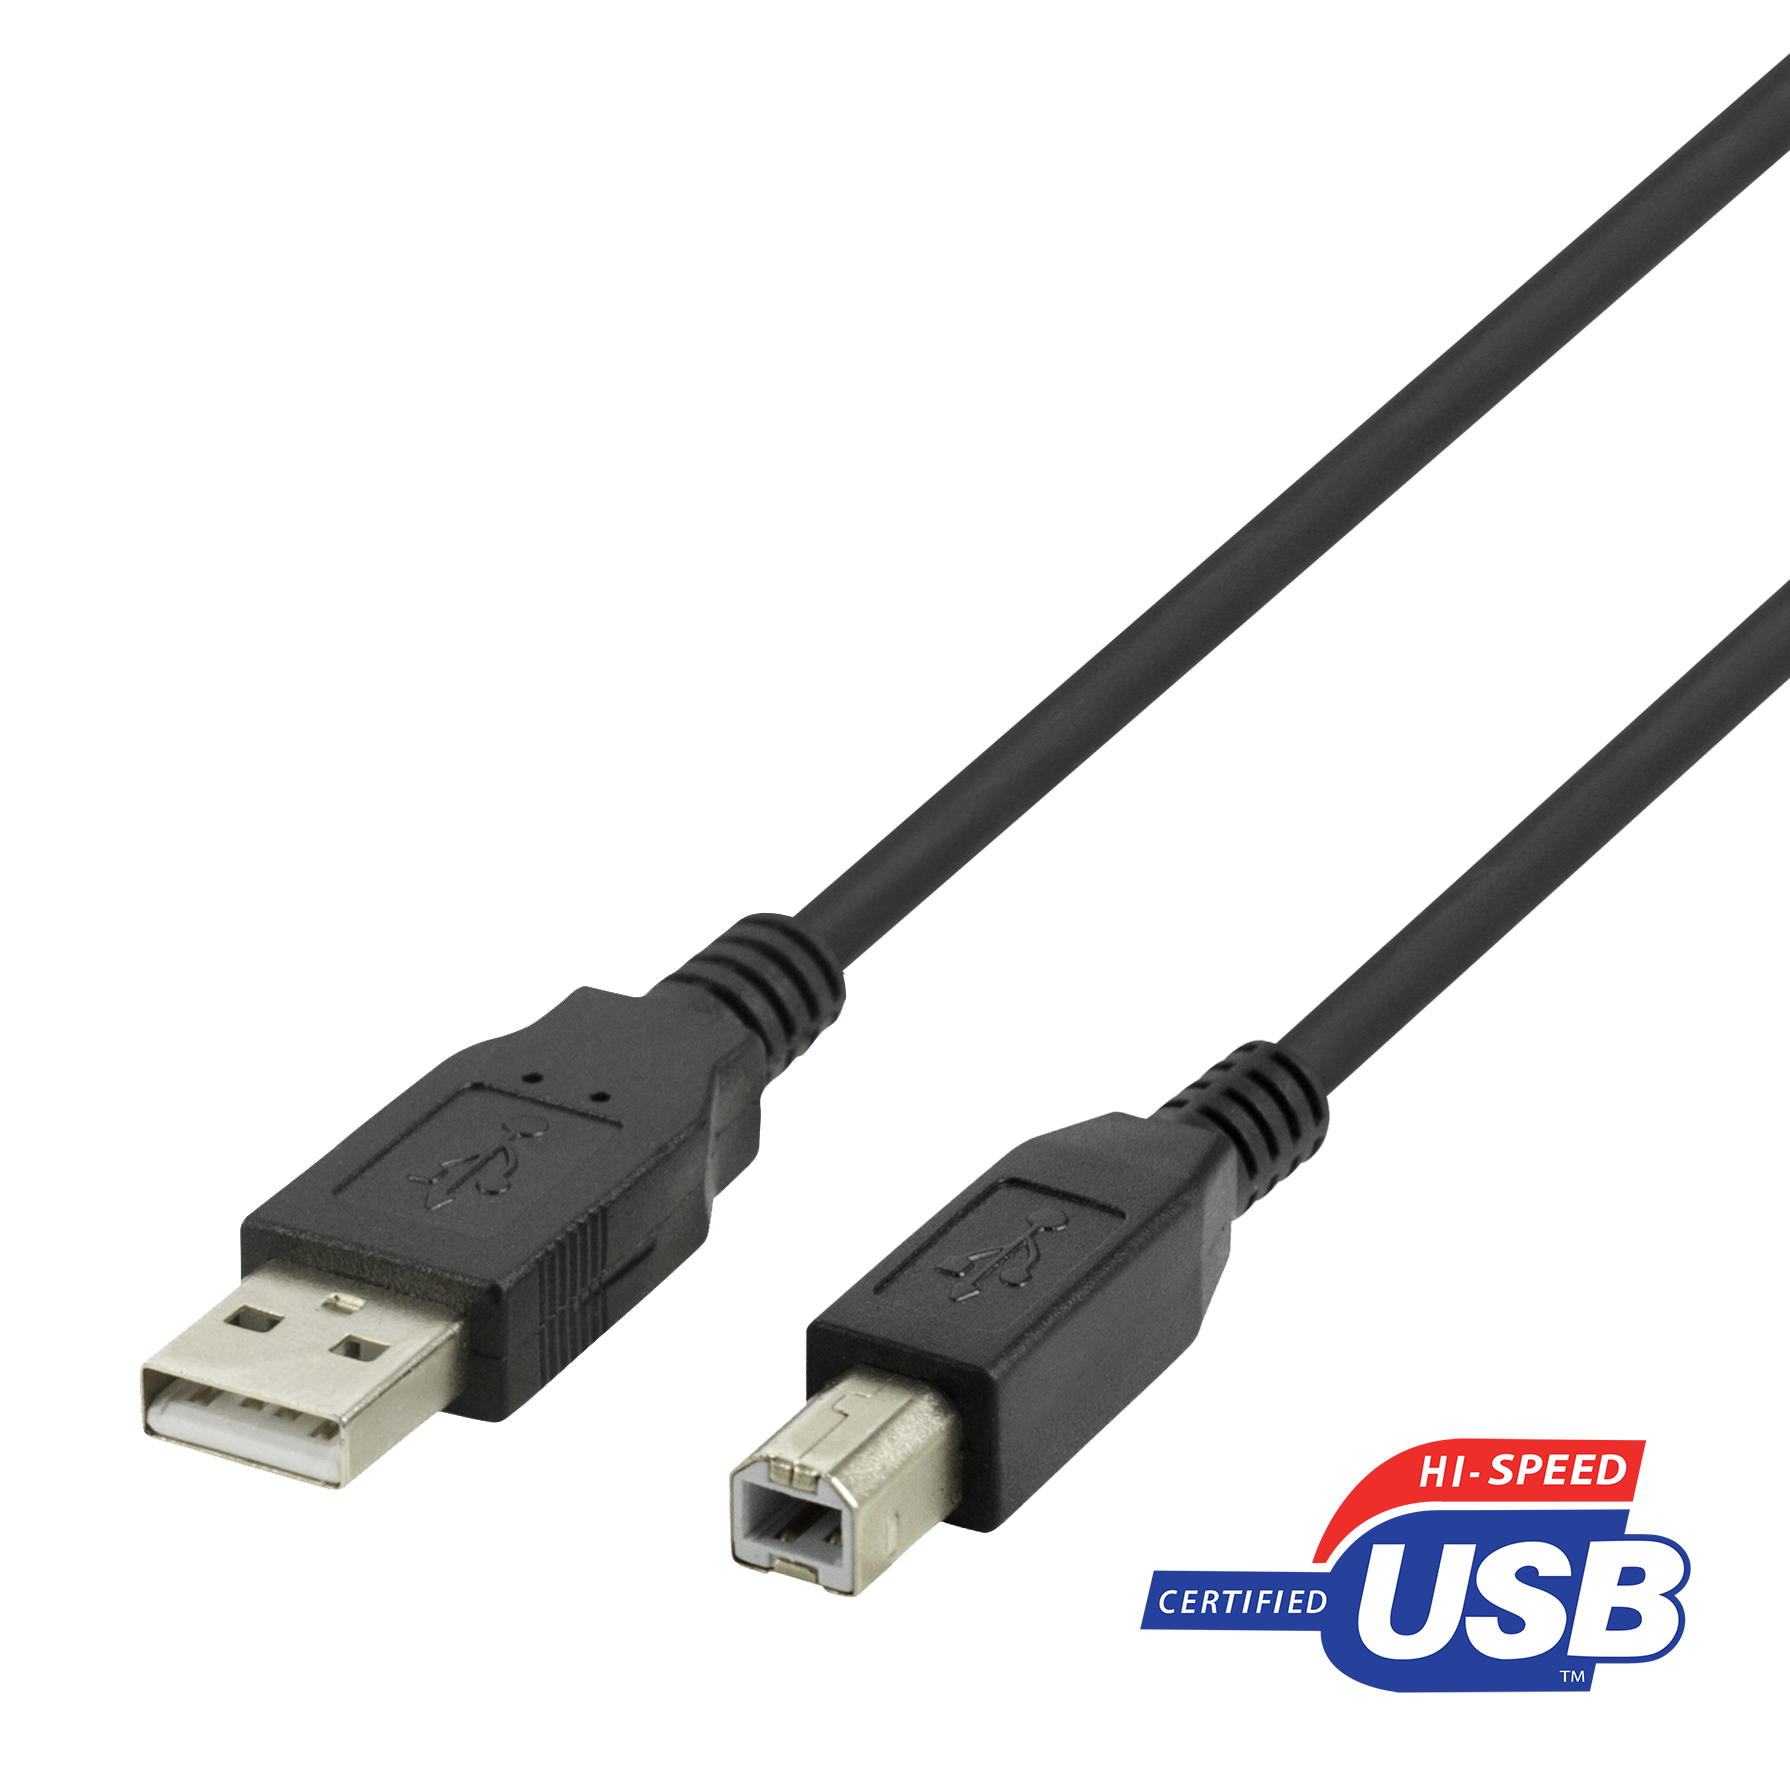  USB-B 2.0 cable DELTACO suitable for printers, 1m black / USB-210S-K / R00140001